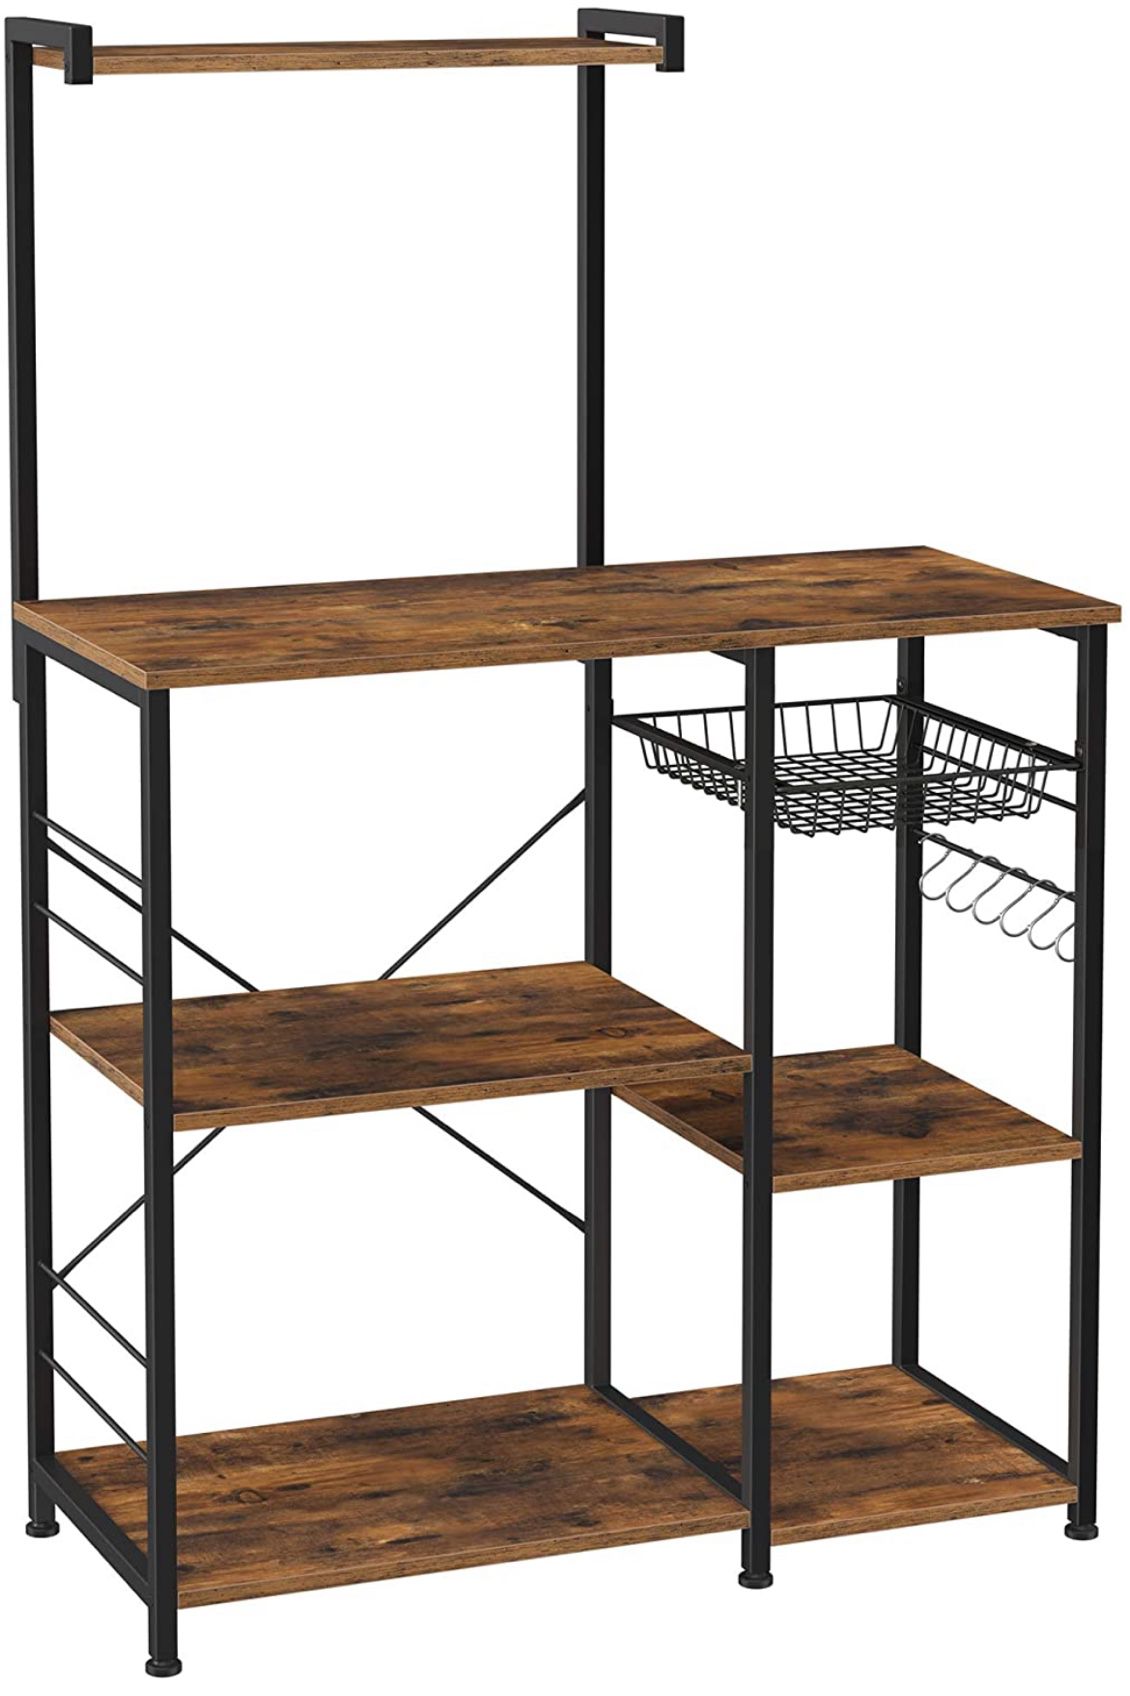 Kitchen Shelf, Storage Rack, Coffee Station, Microwaveo Oven Stand, Wire Basket